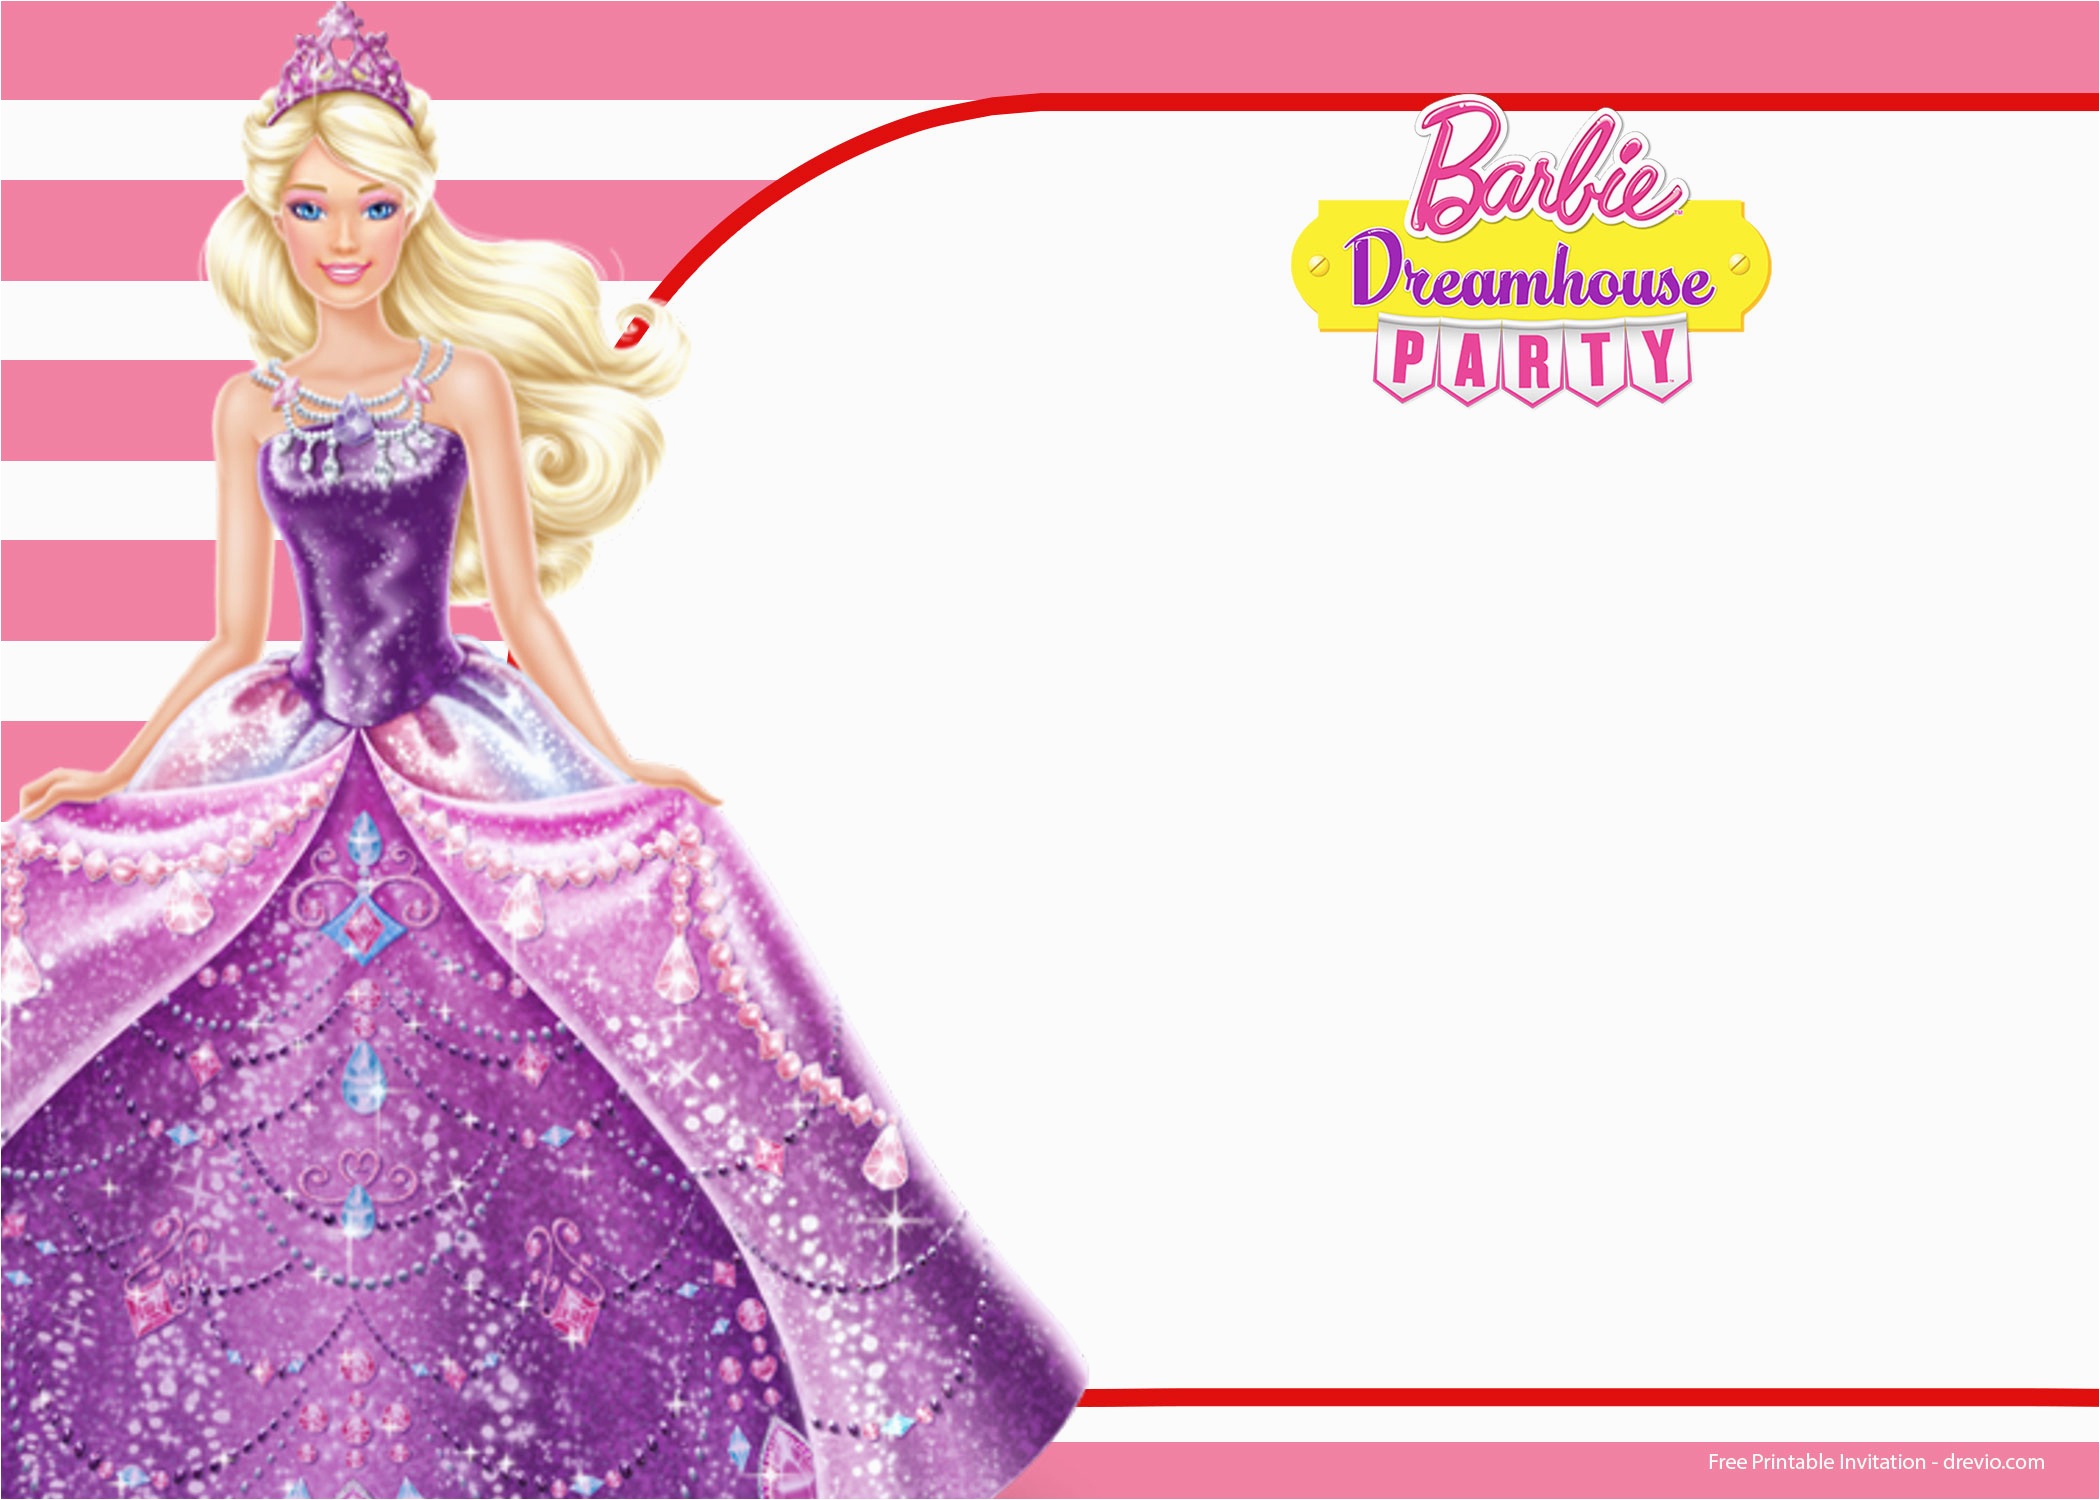 Barbie Birthday Invitations Templates Free | Birthdaybuzz - Free Printable Barbie Birthday Party Invitations